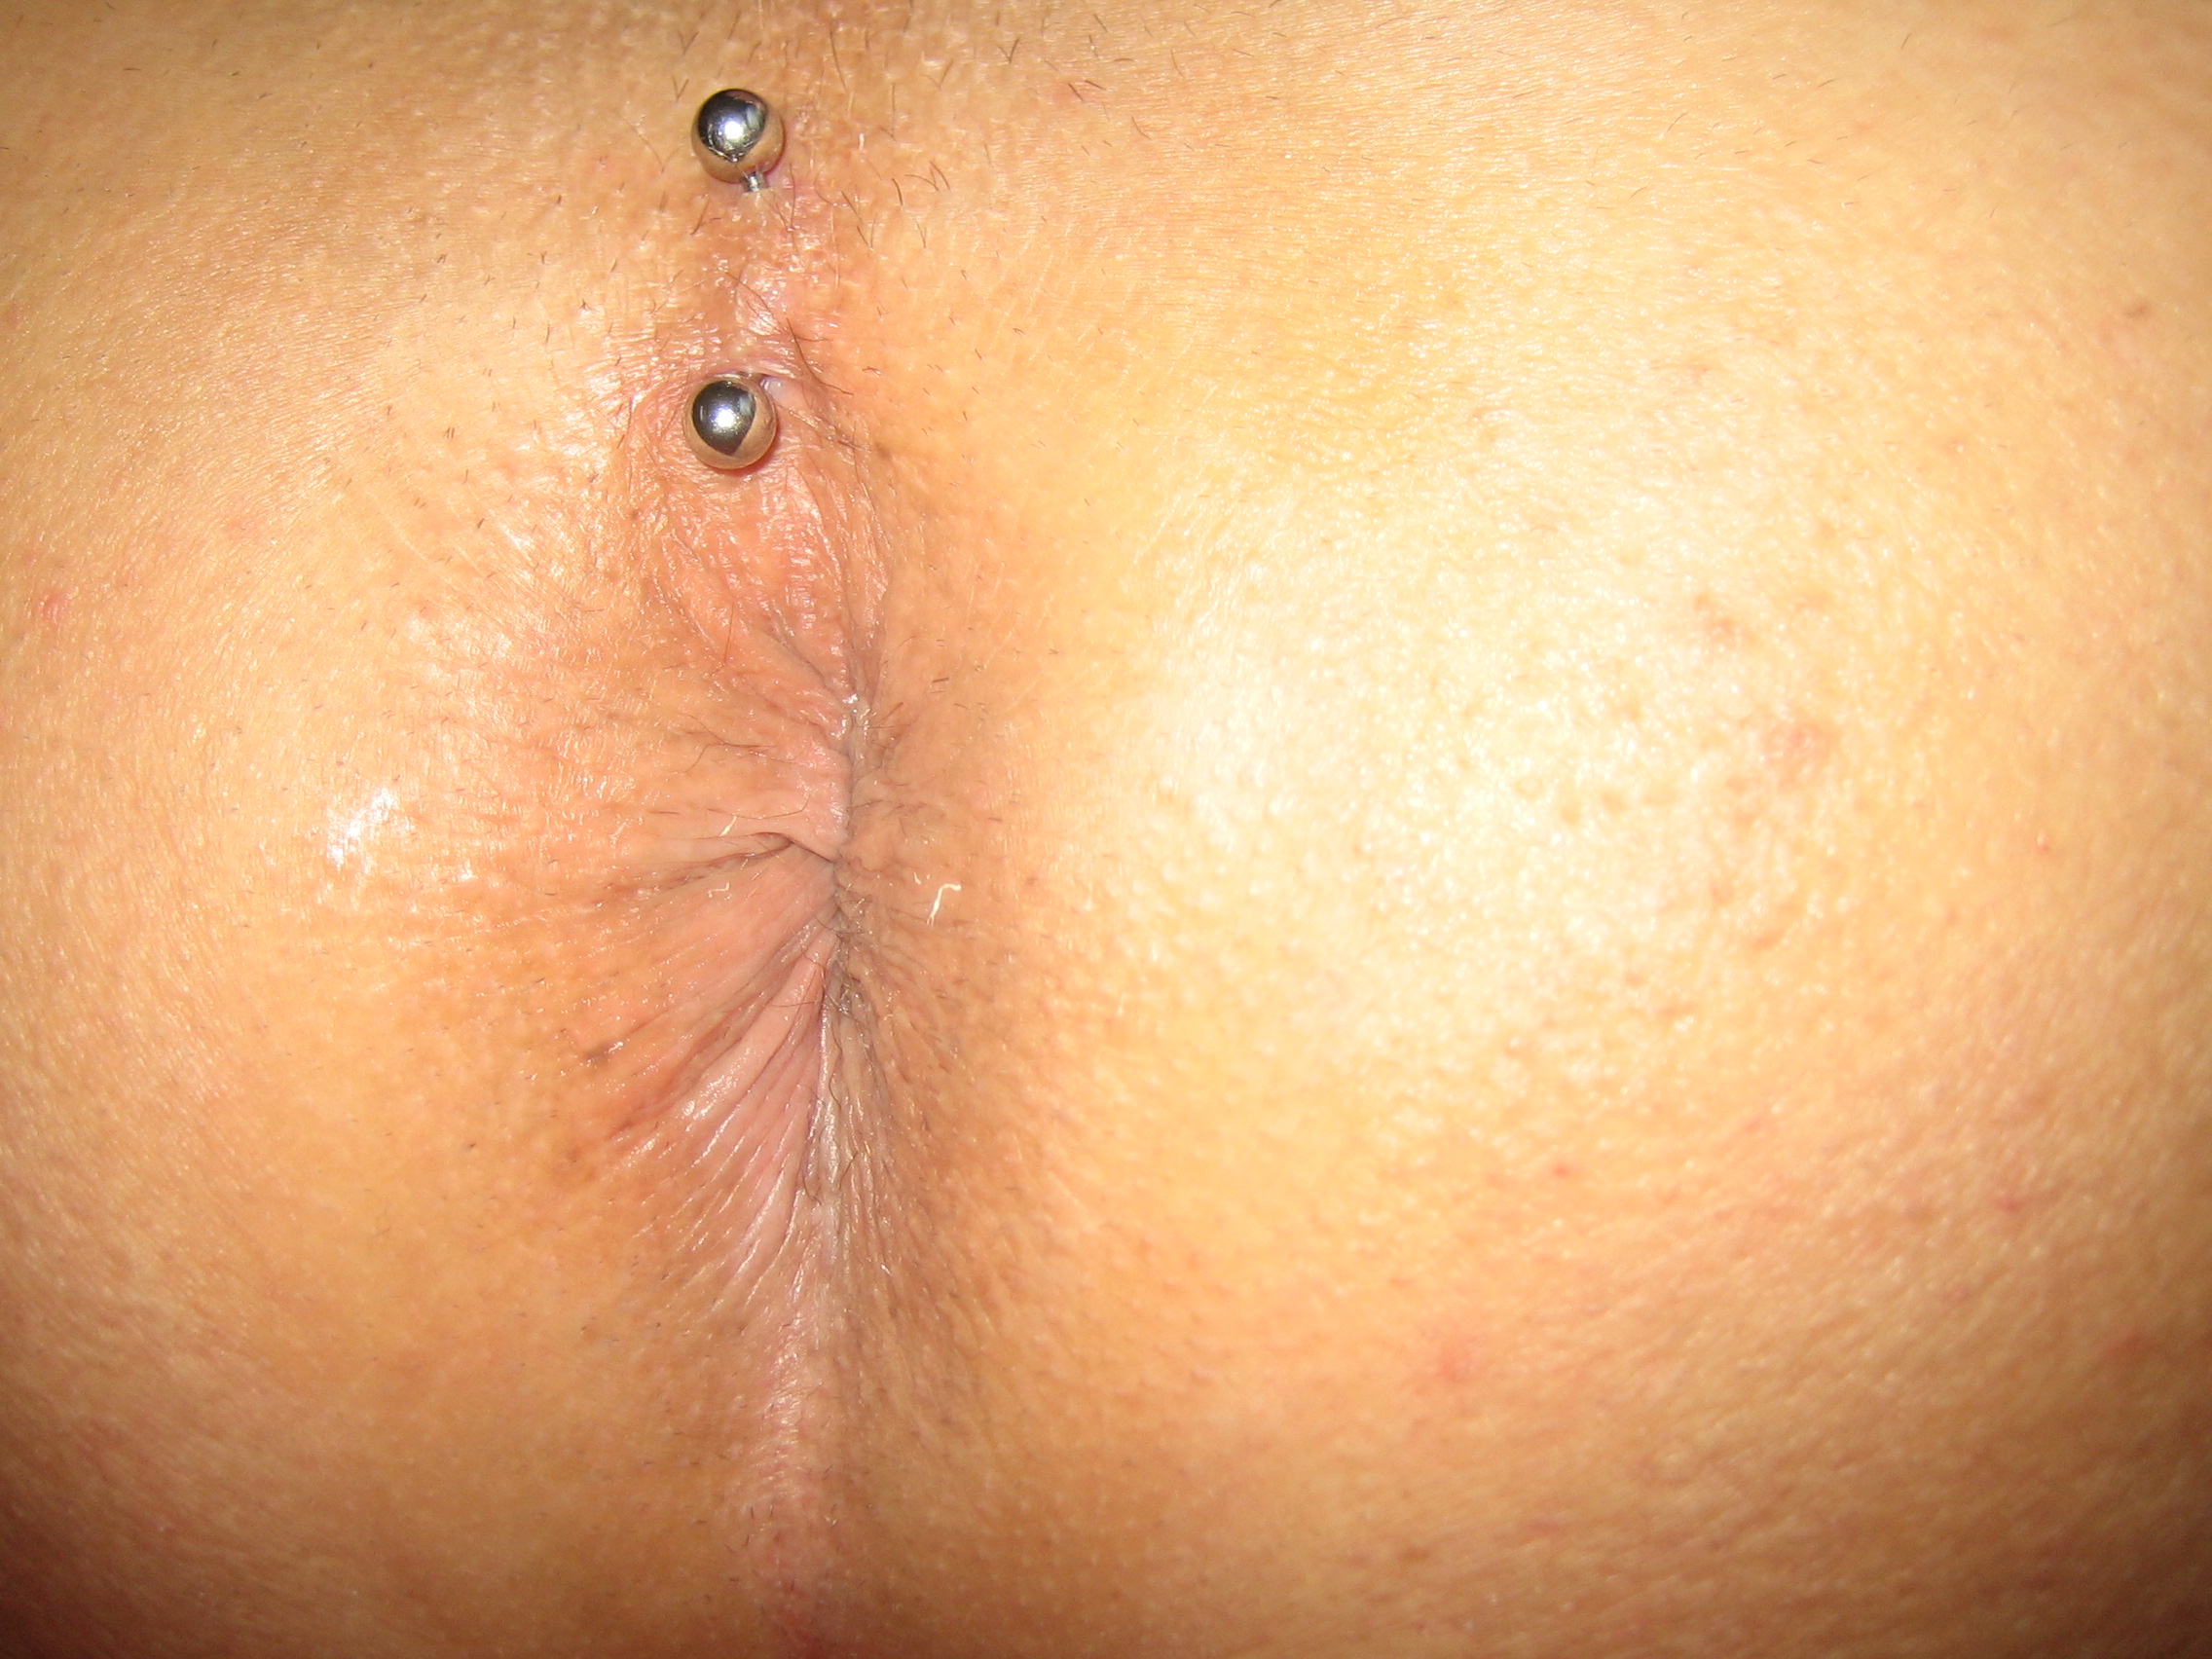 Butthole piercing